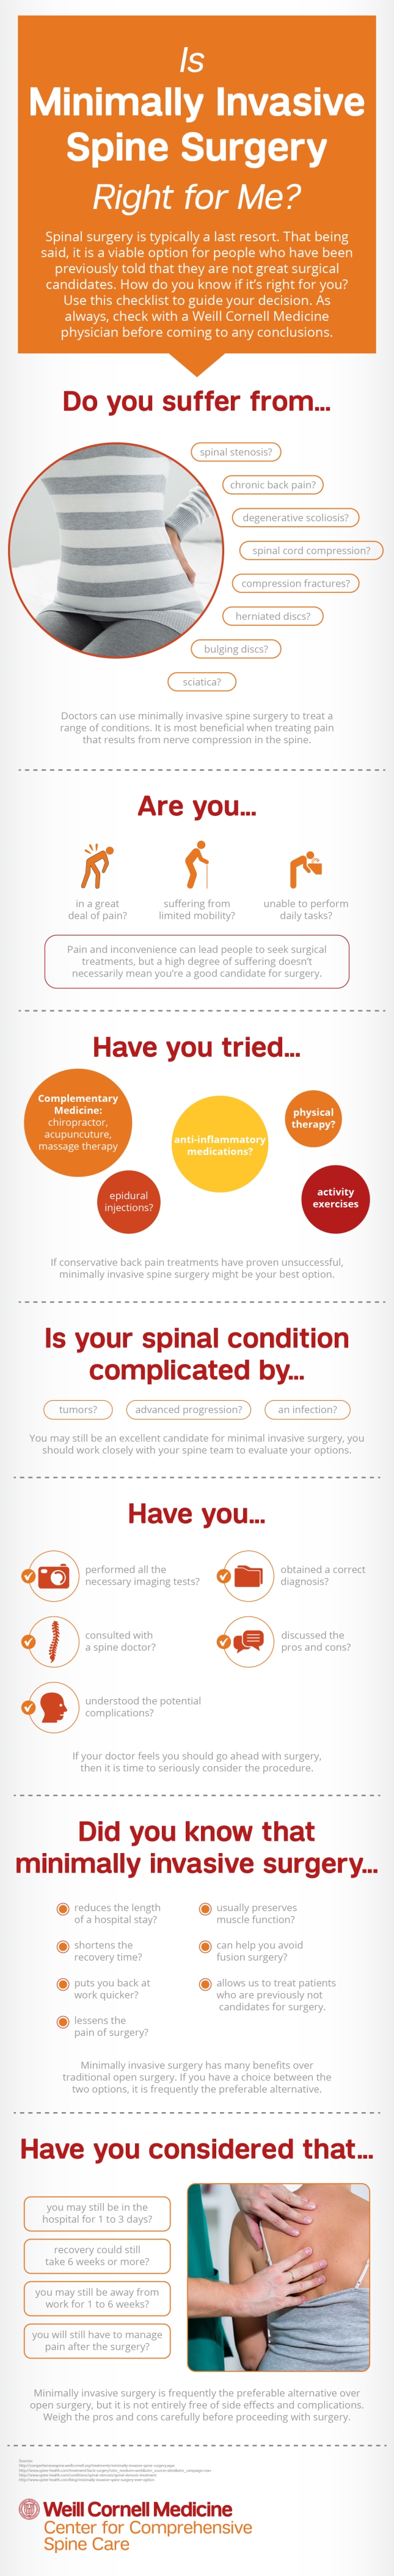 Minimally Invasive Spine Surgery infographic